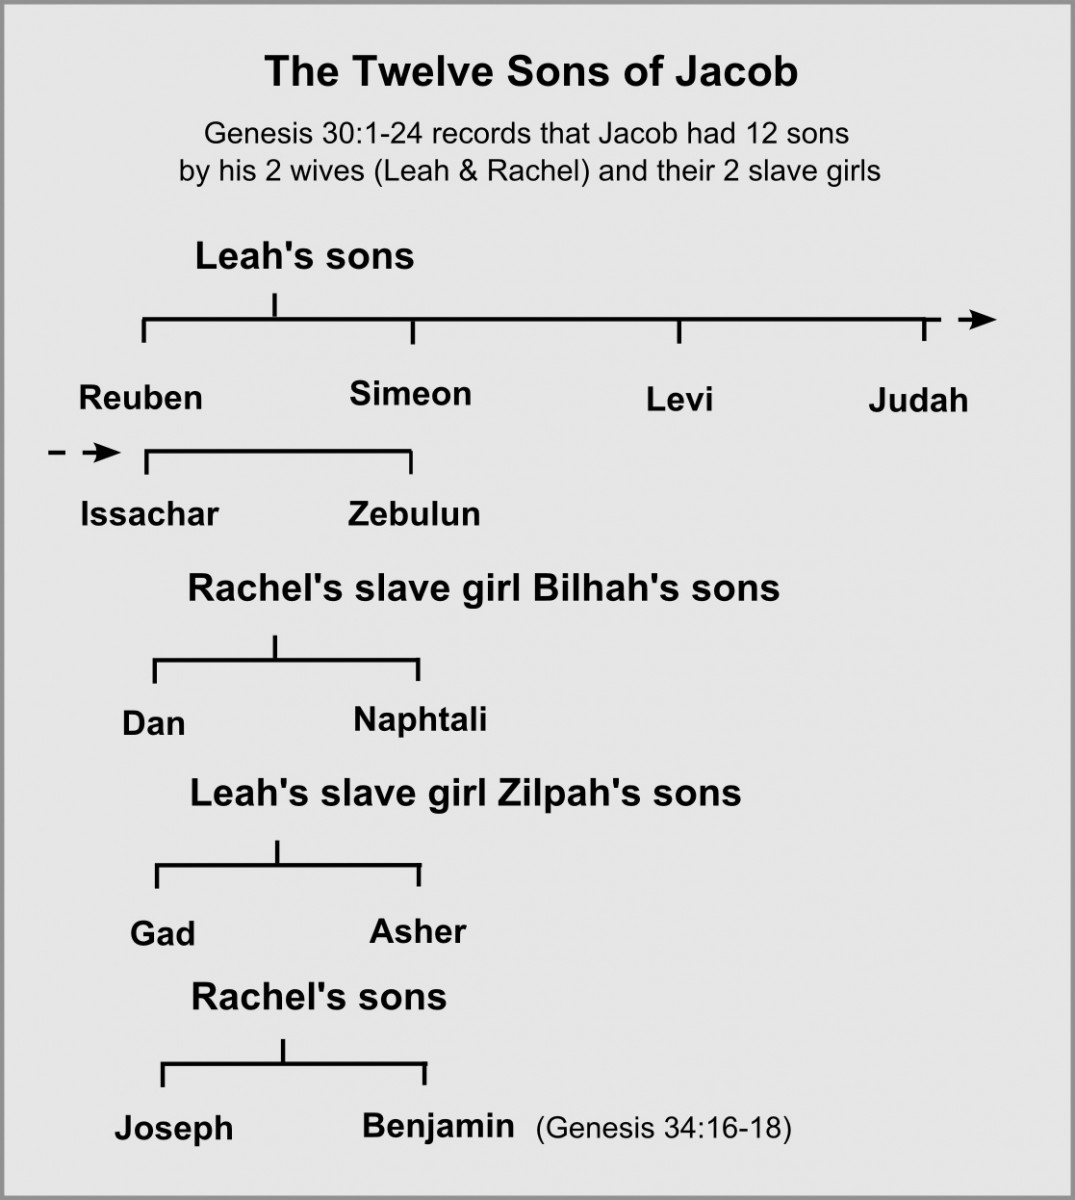 The Twelve Sons of Jacob